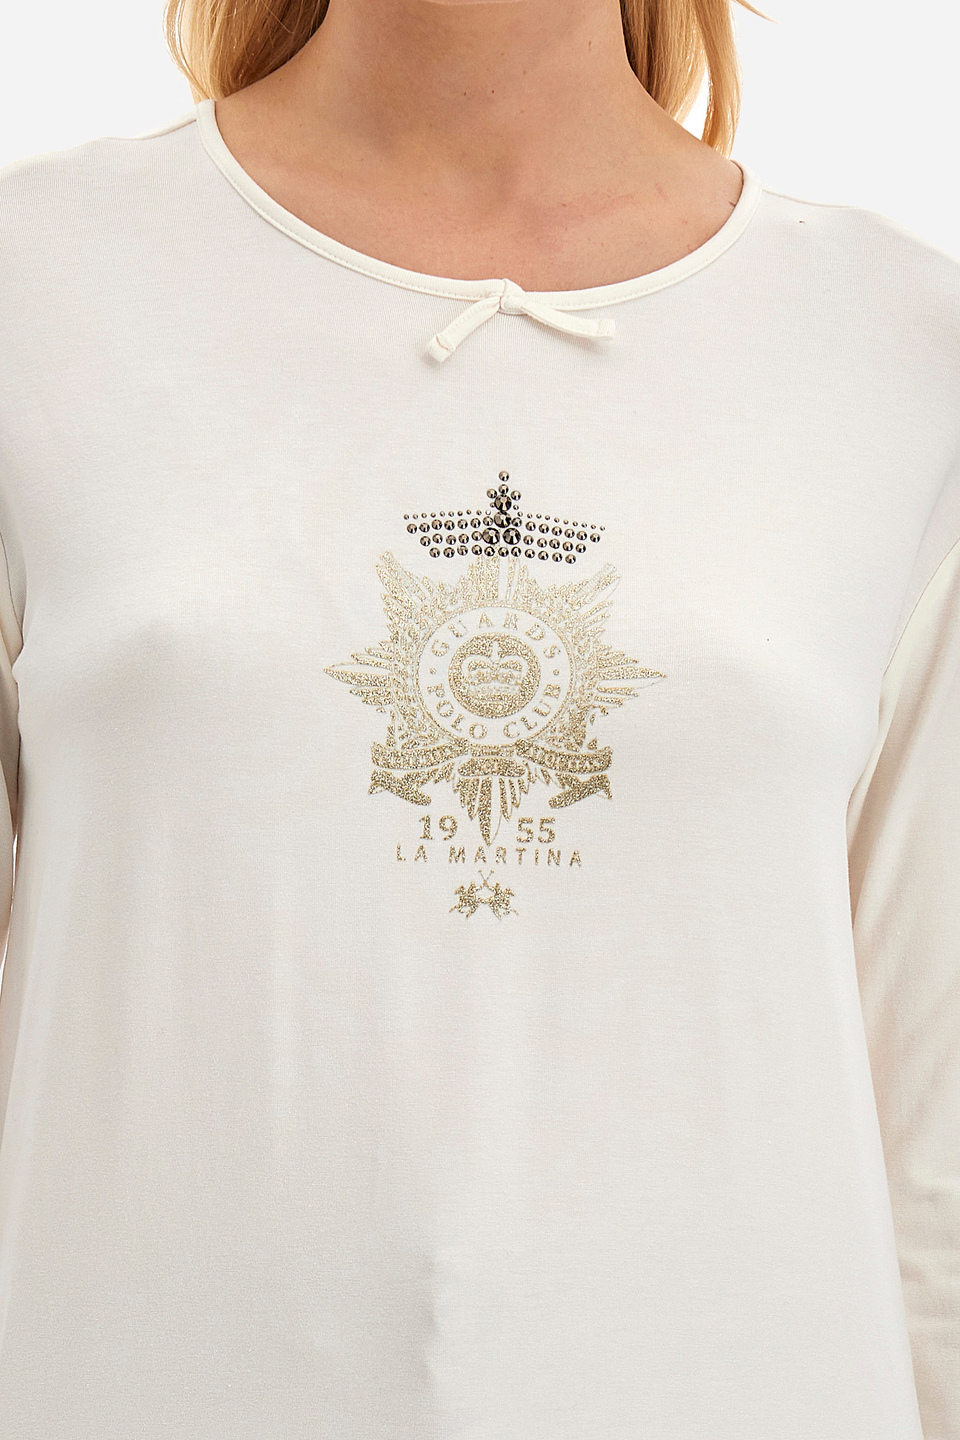 T-shirt donna regular fit - Wyetta | La Martina - Official Online Shop